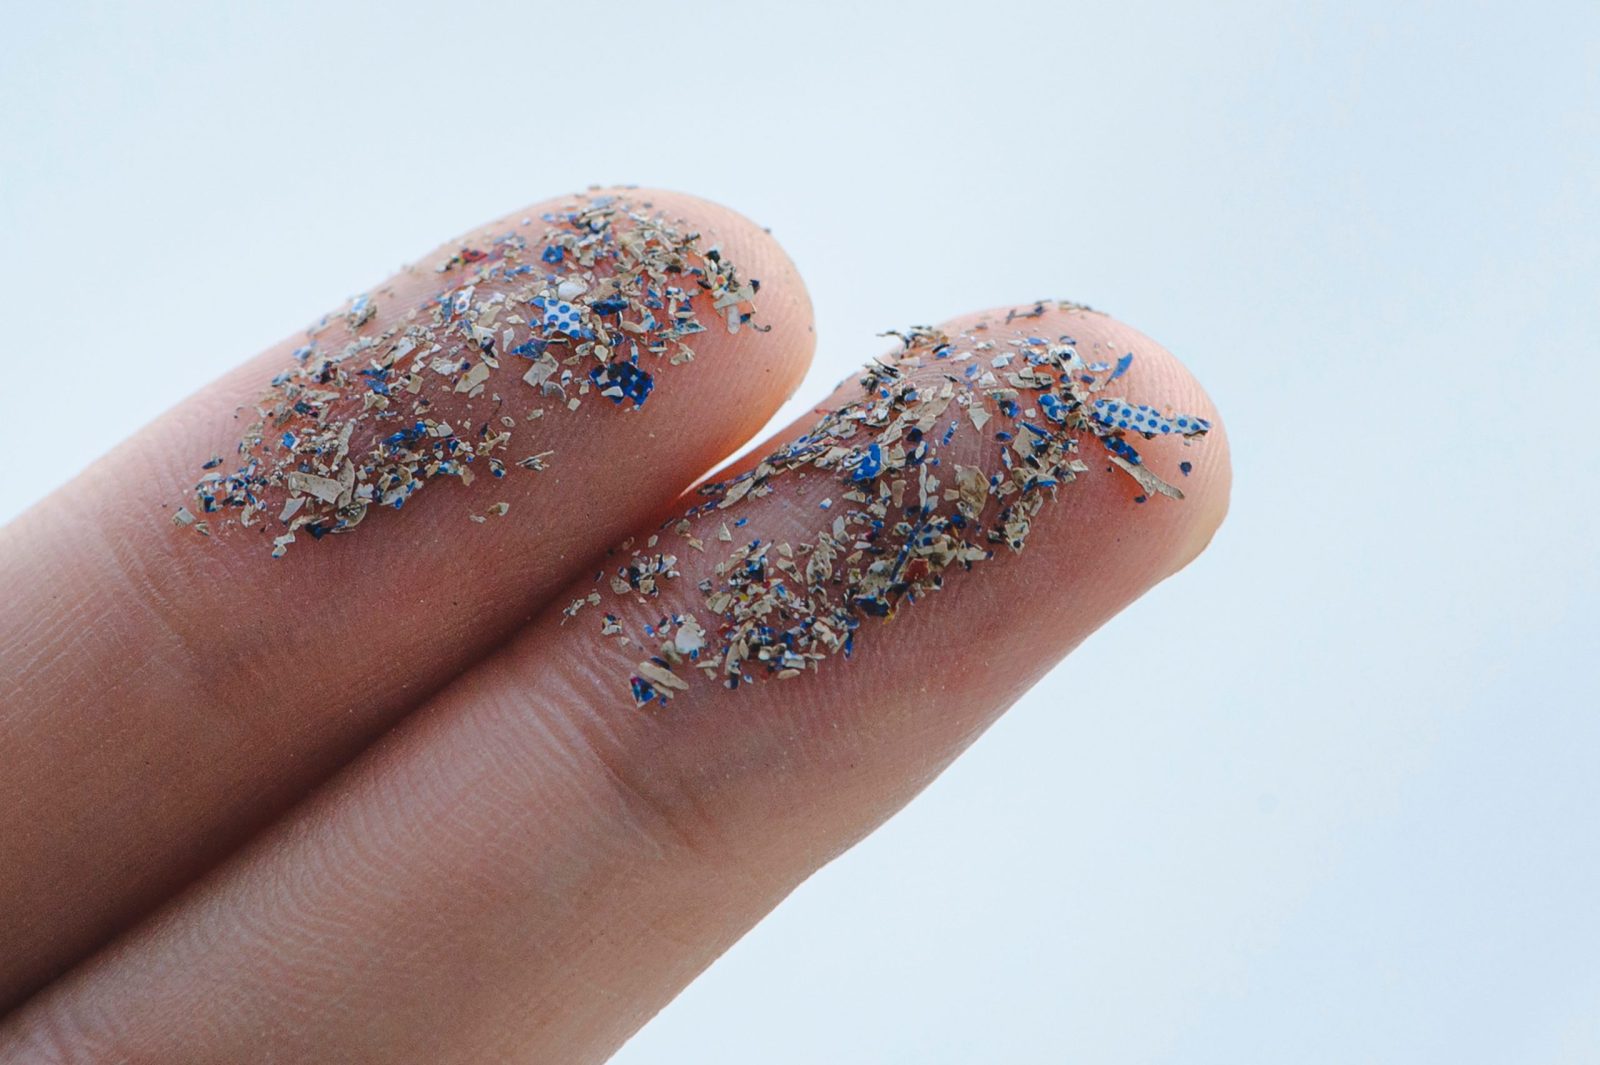 Microplastics on someones fingers